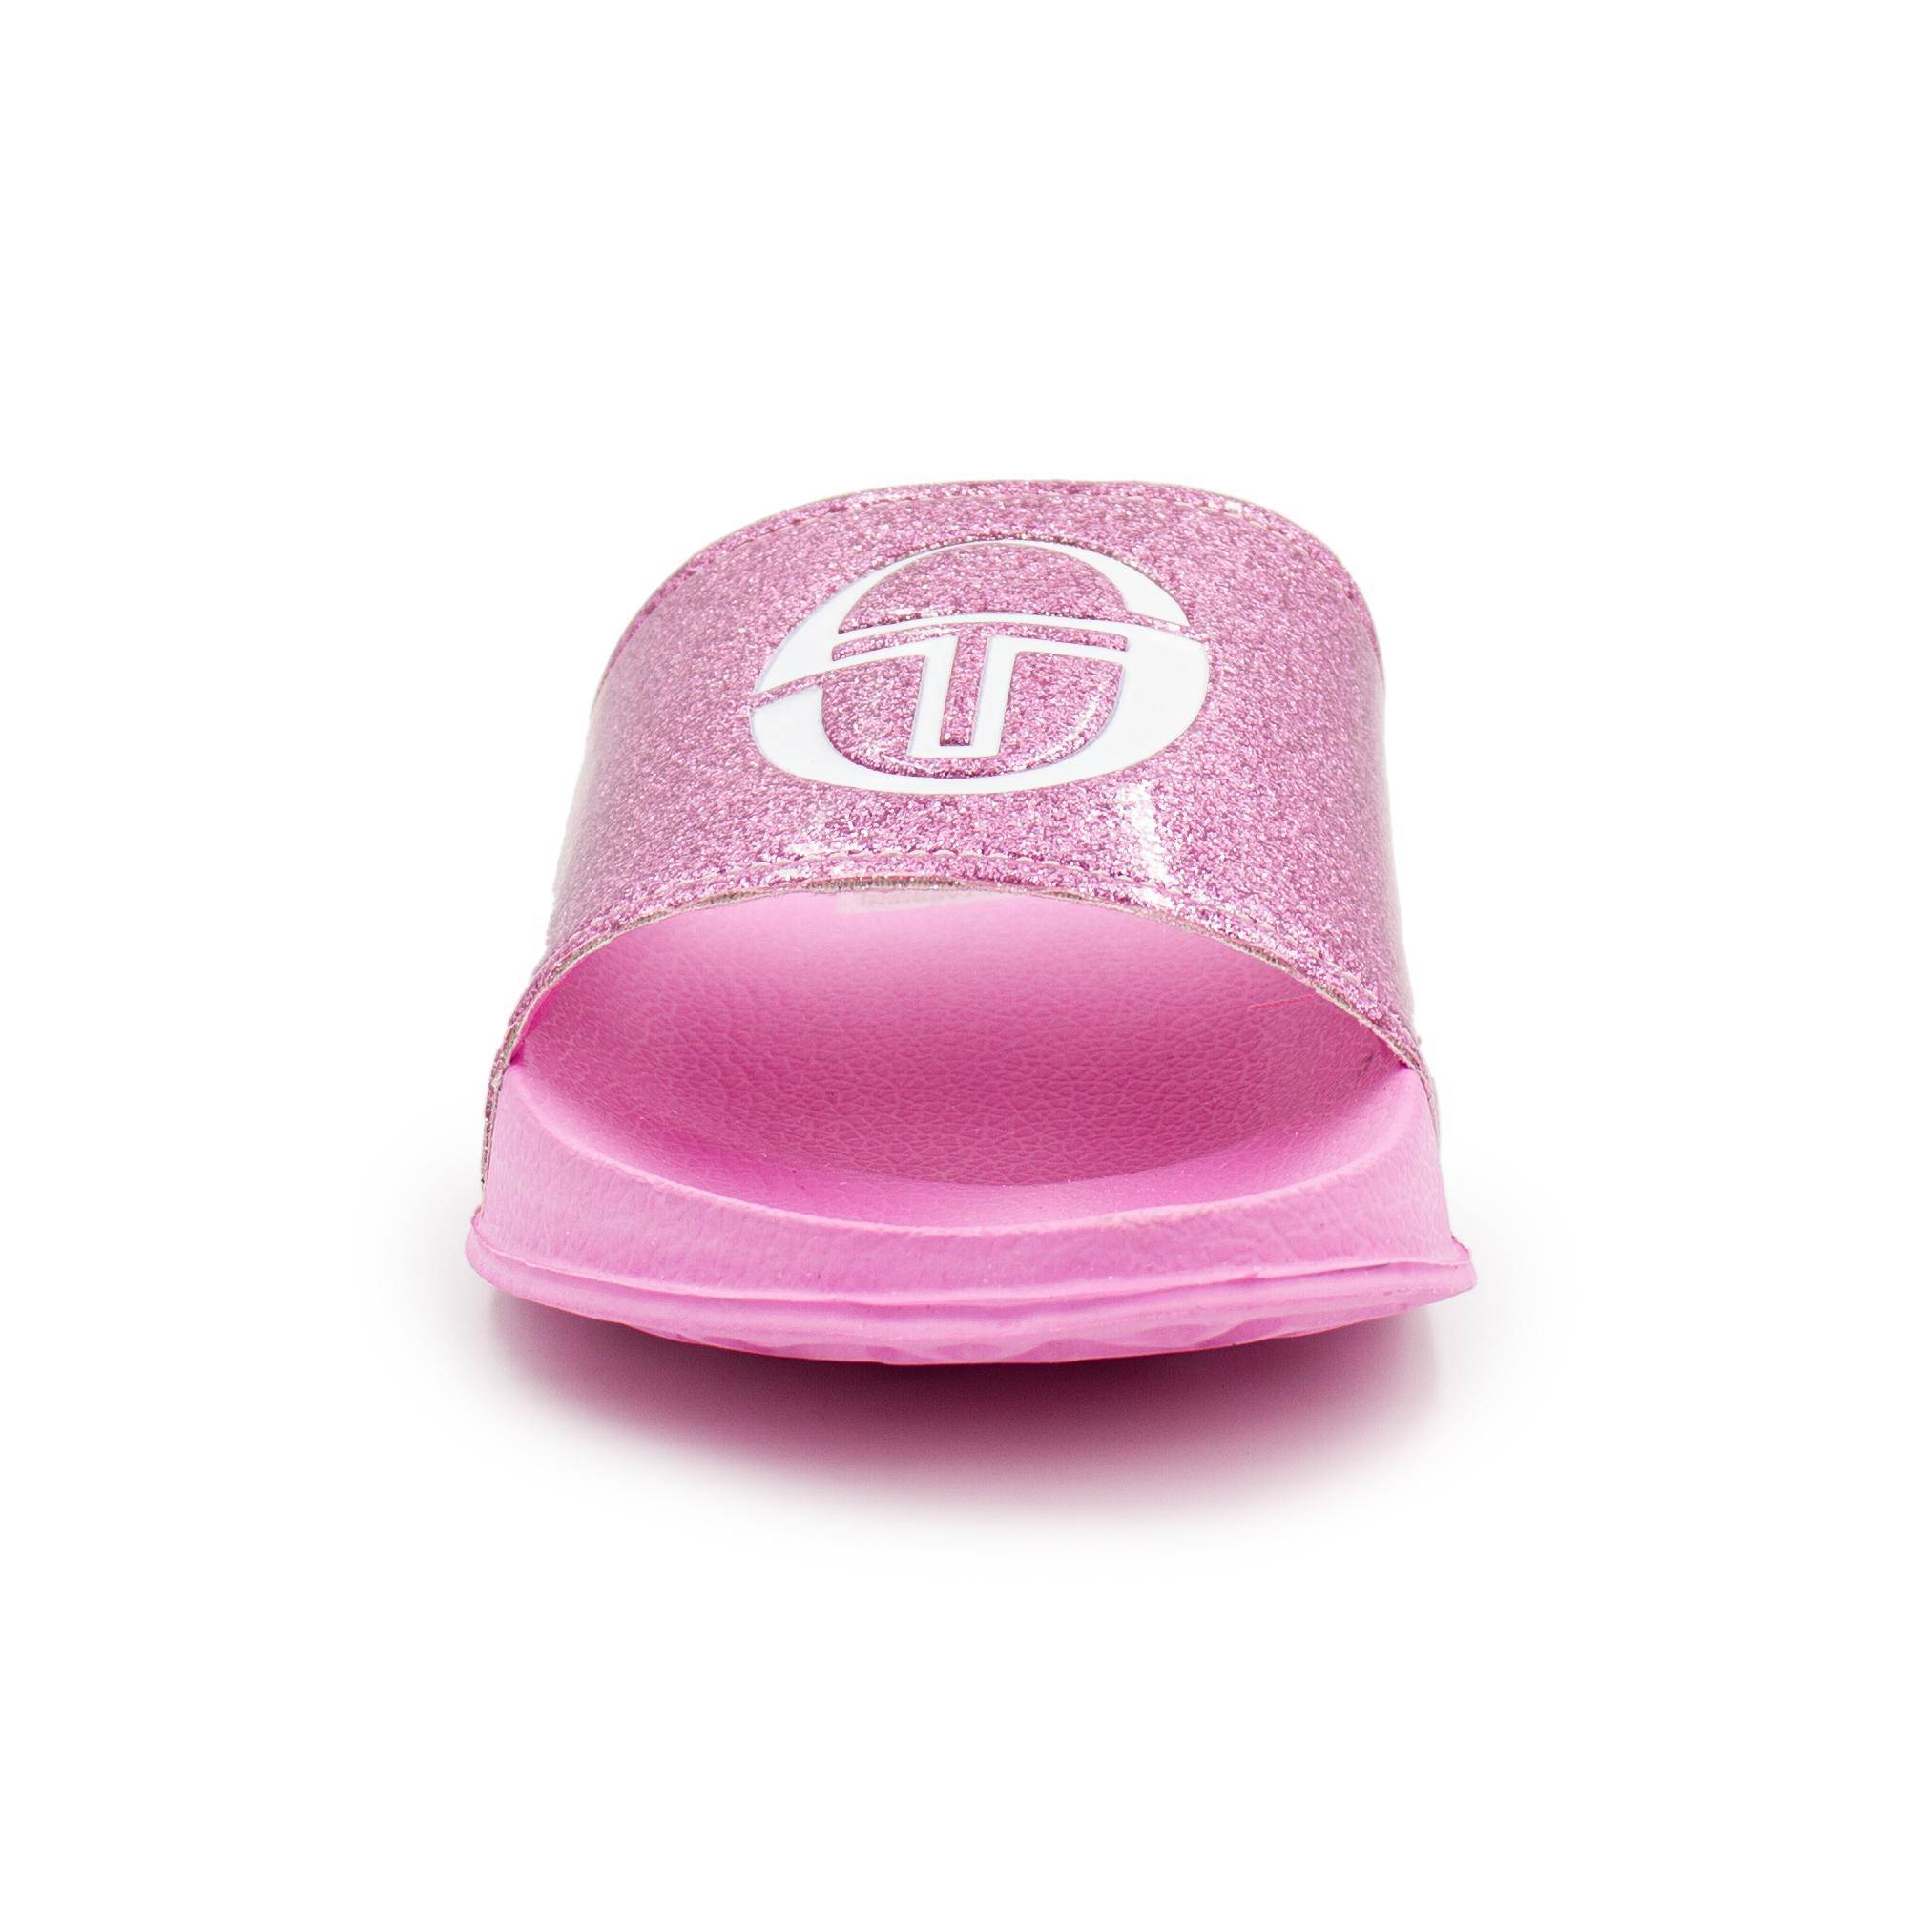 Женские сланцы Sergio Tacchini (REMIX GLITTER STW219006), розовые, цвет розовый, размер 39 - фото 3